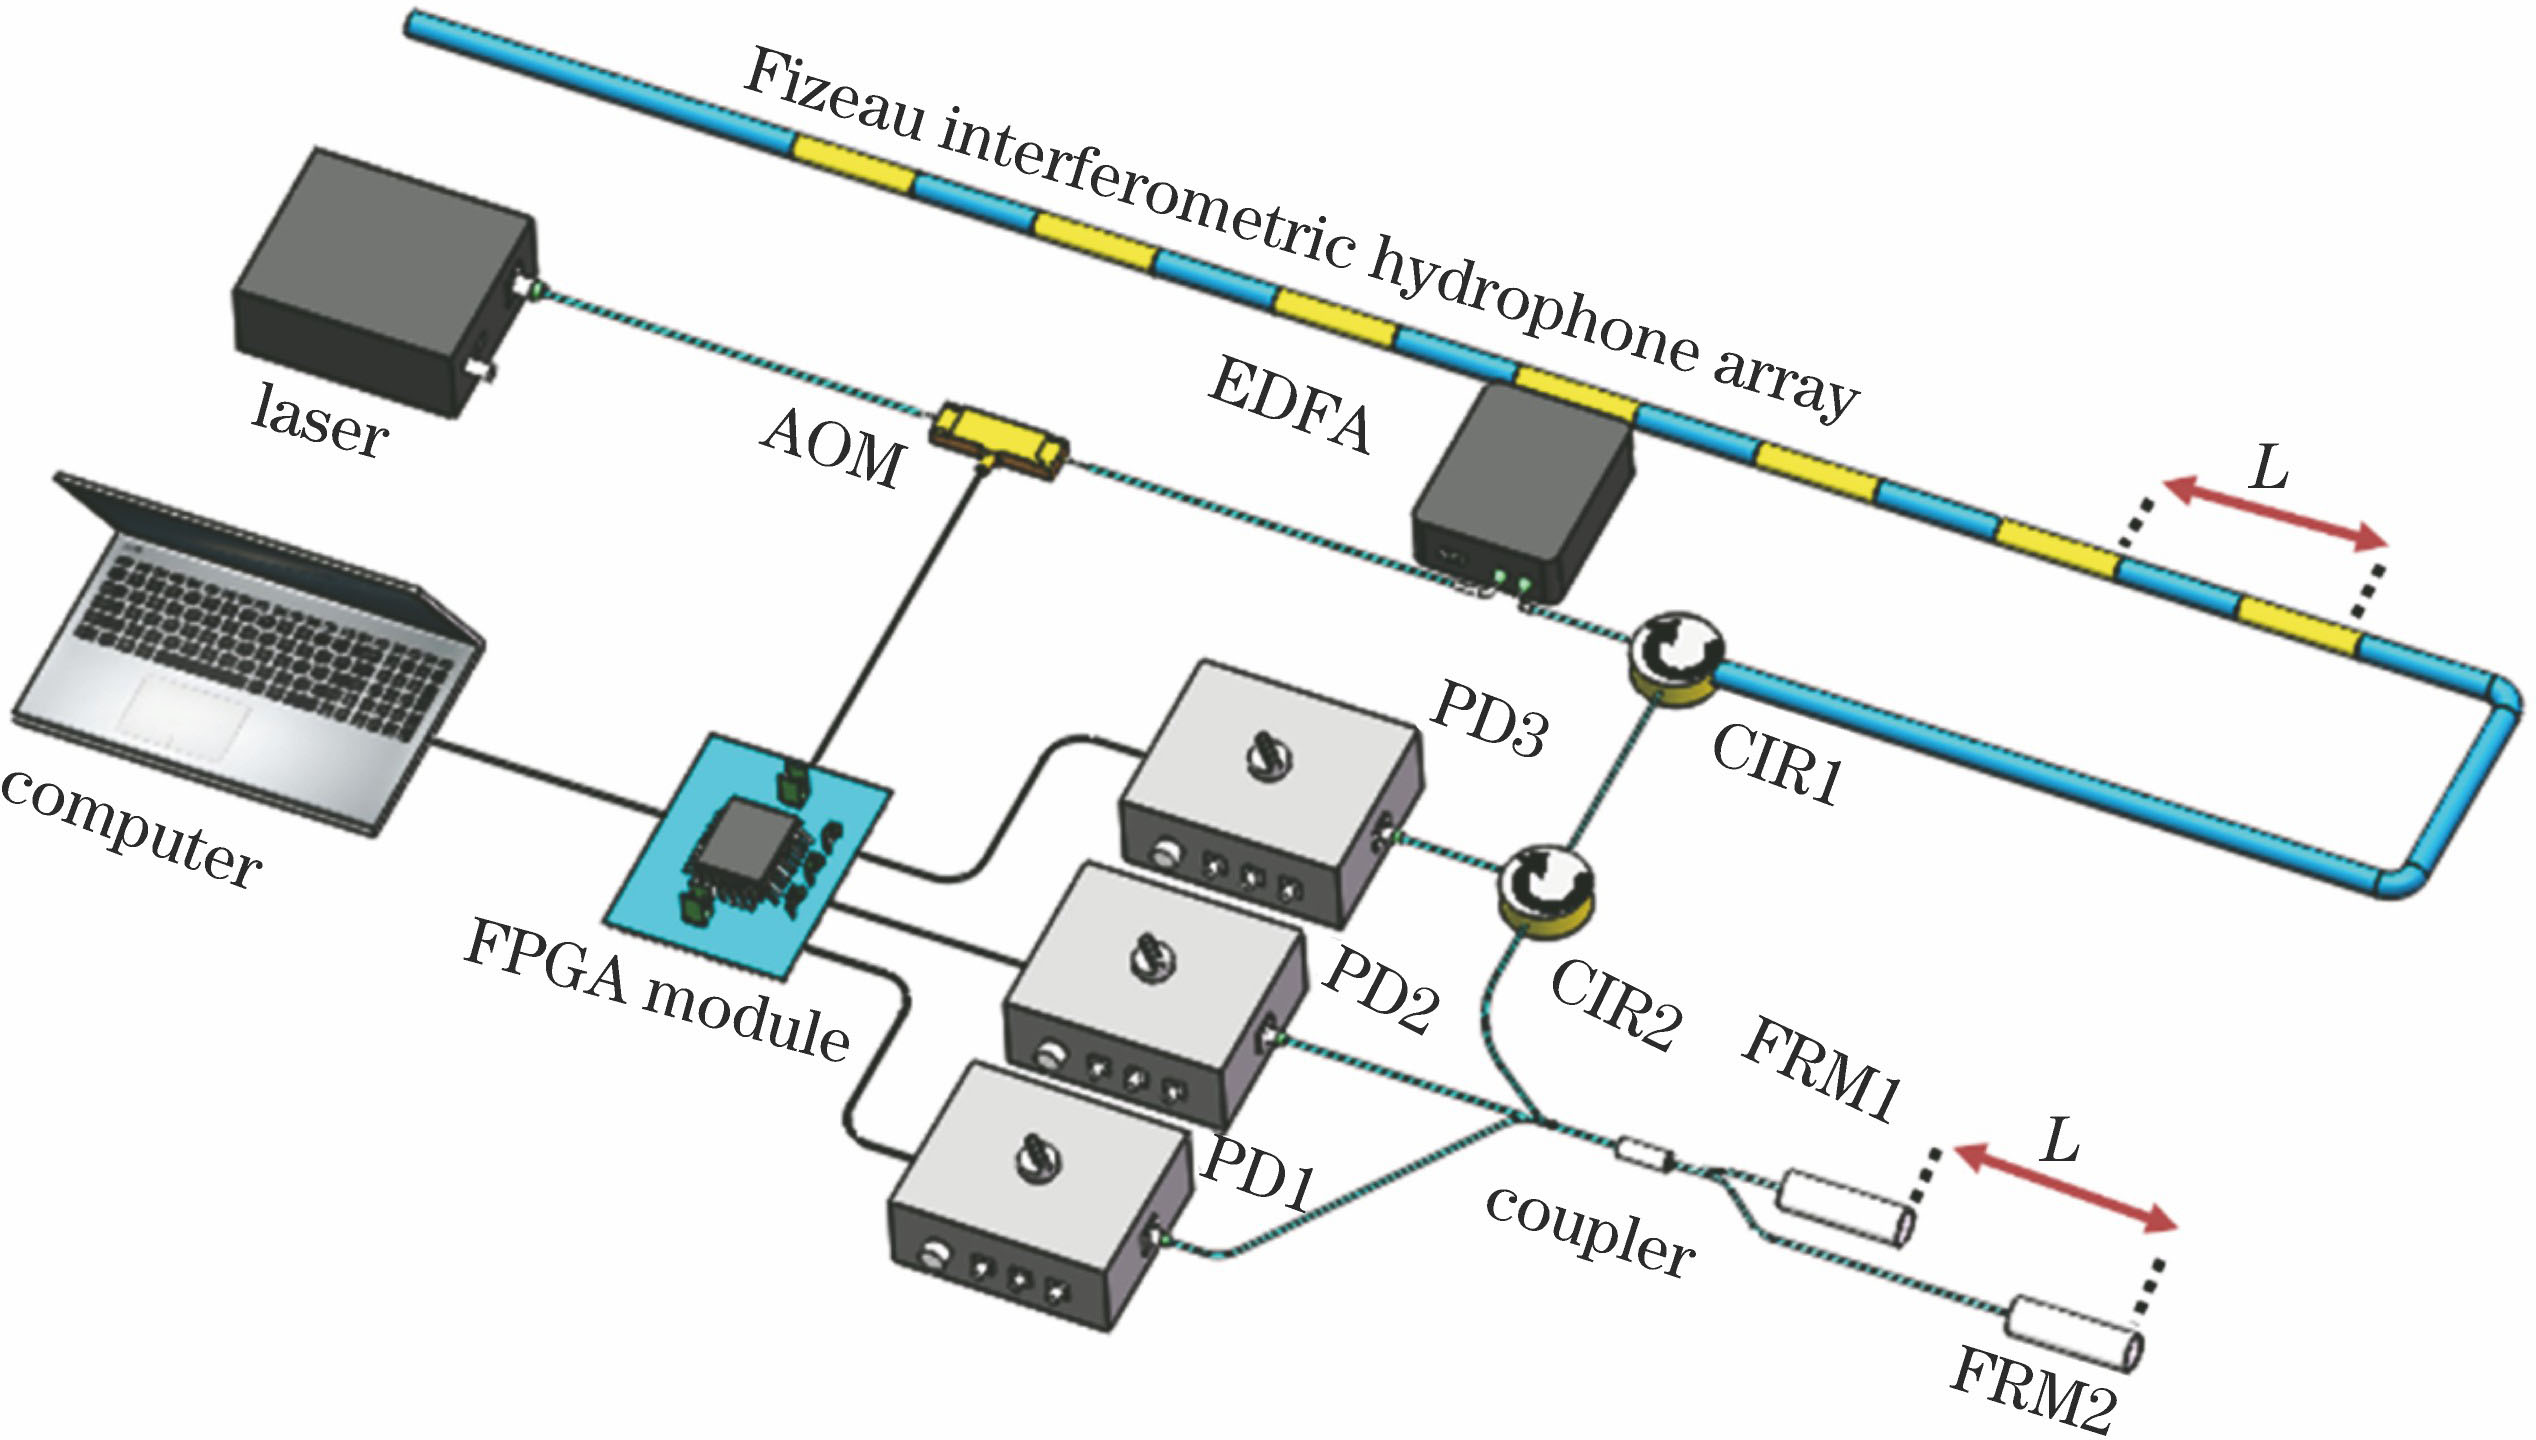 Structure of Fizeau interferometric optical fiber hydrophone system